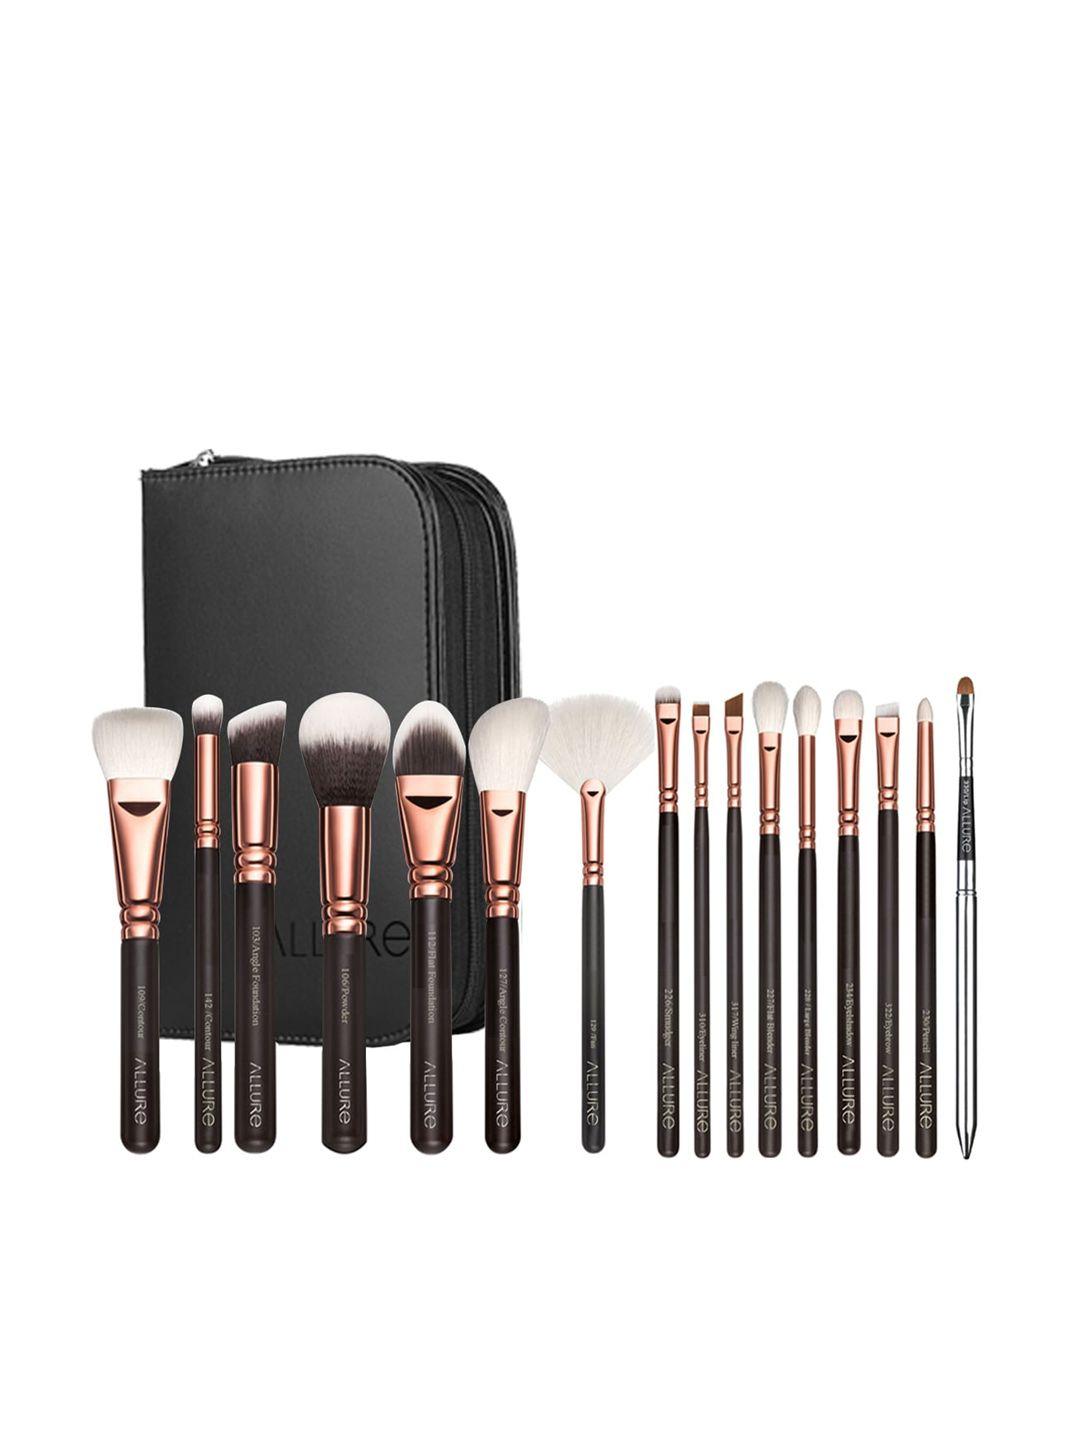 allure set of 16 makeup brushes - rgk 16